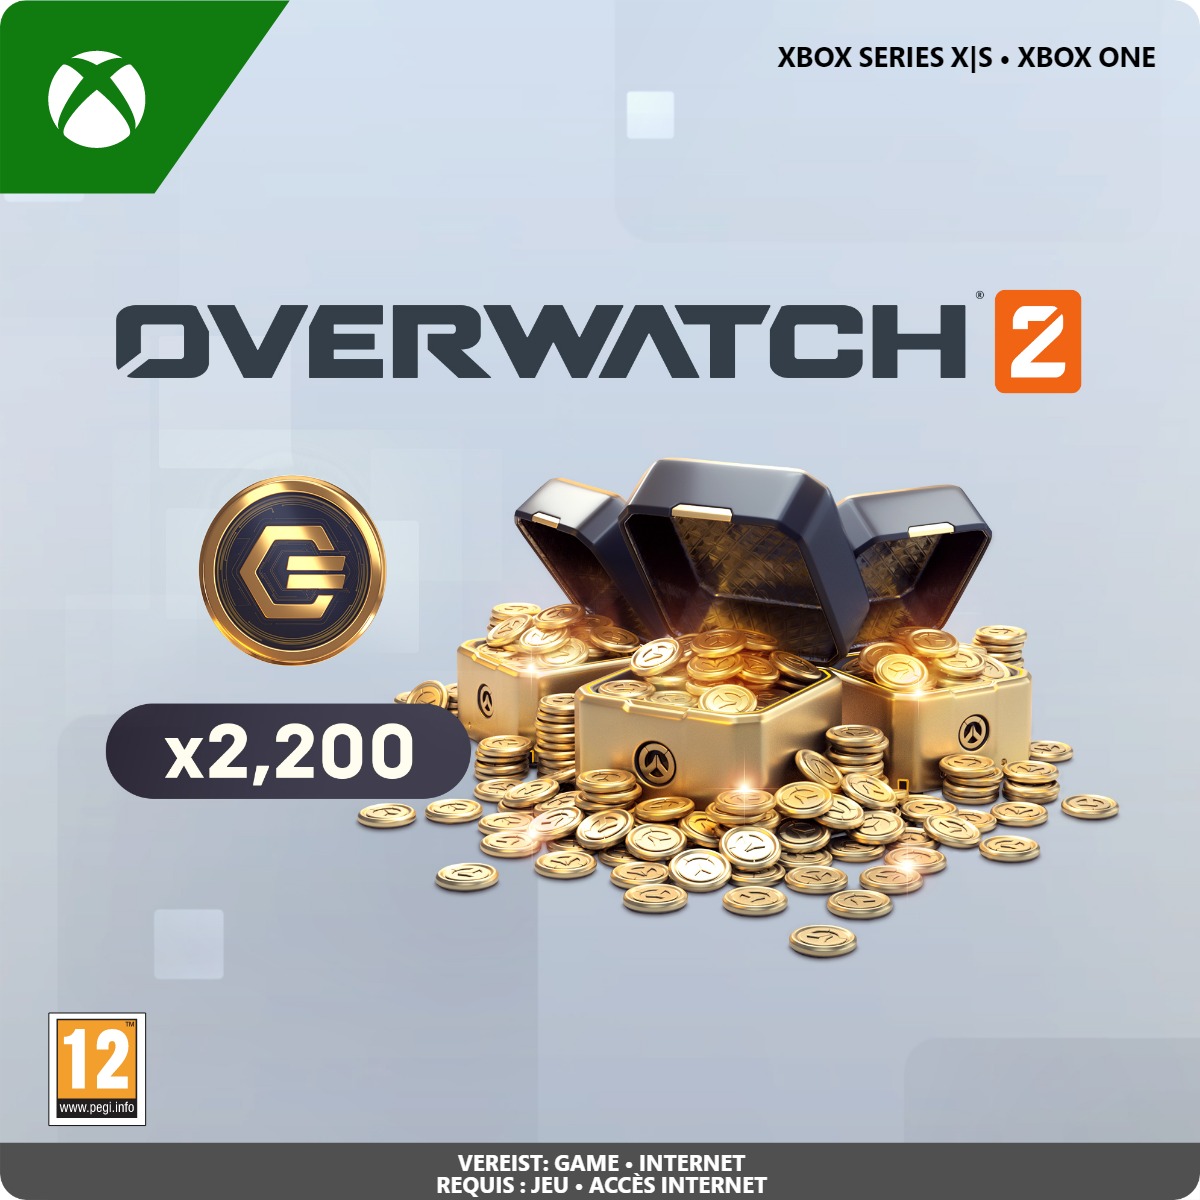 2000 overwatch 2 coins xbox